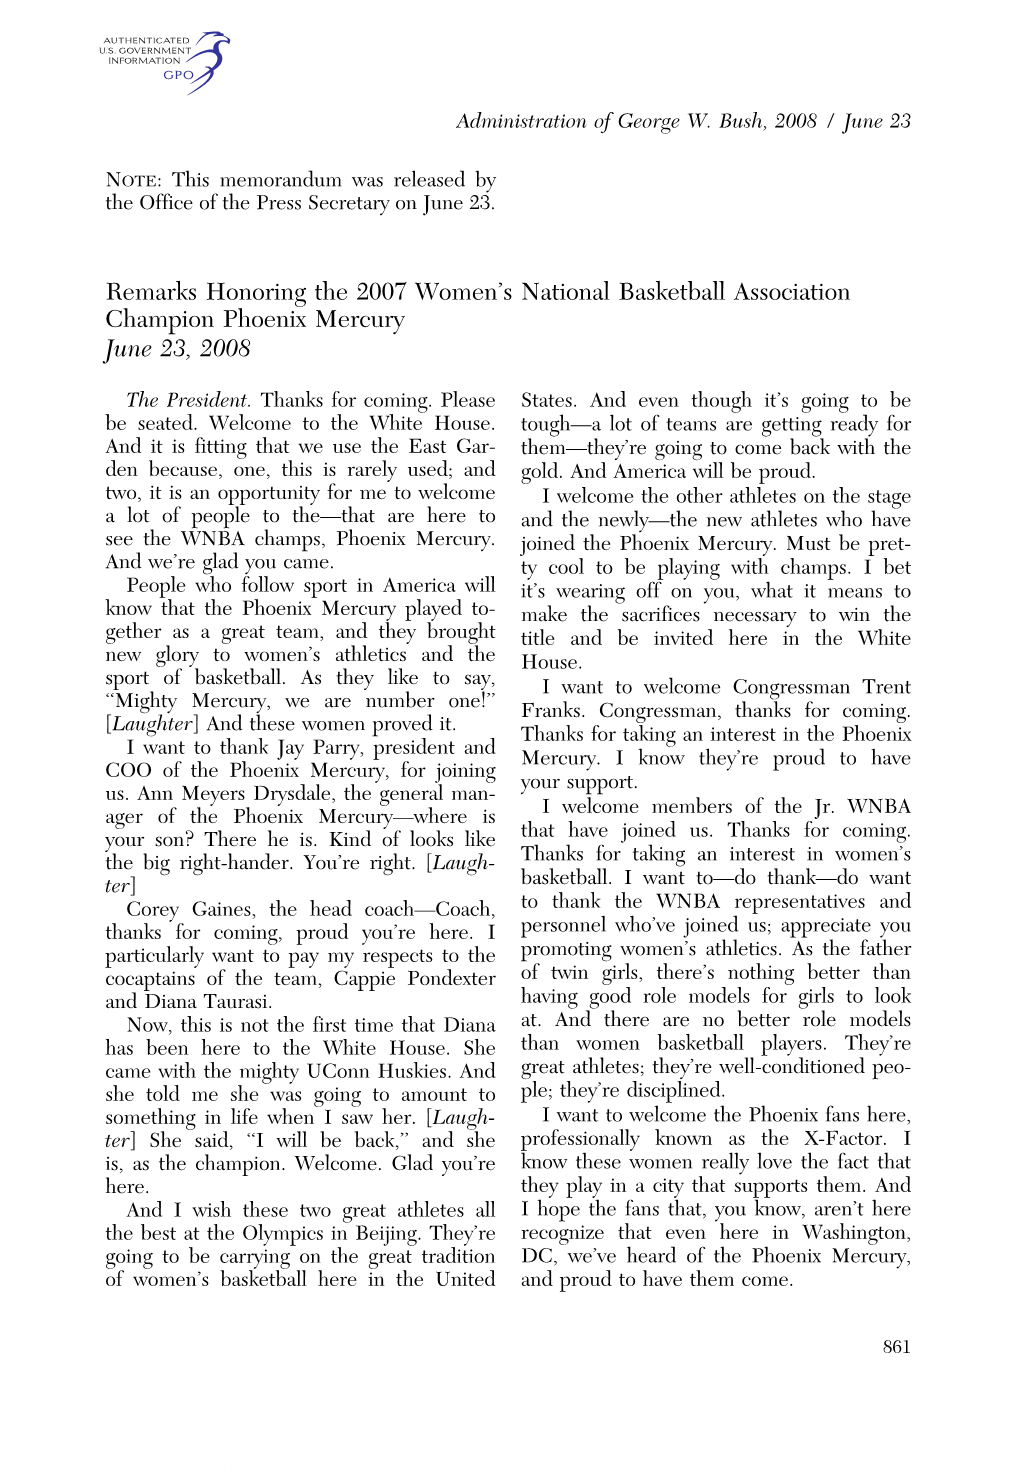 Remarks Honoring the 2007 Women's National Basketball Association